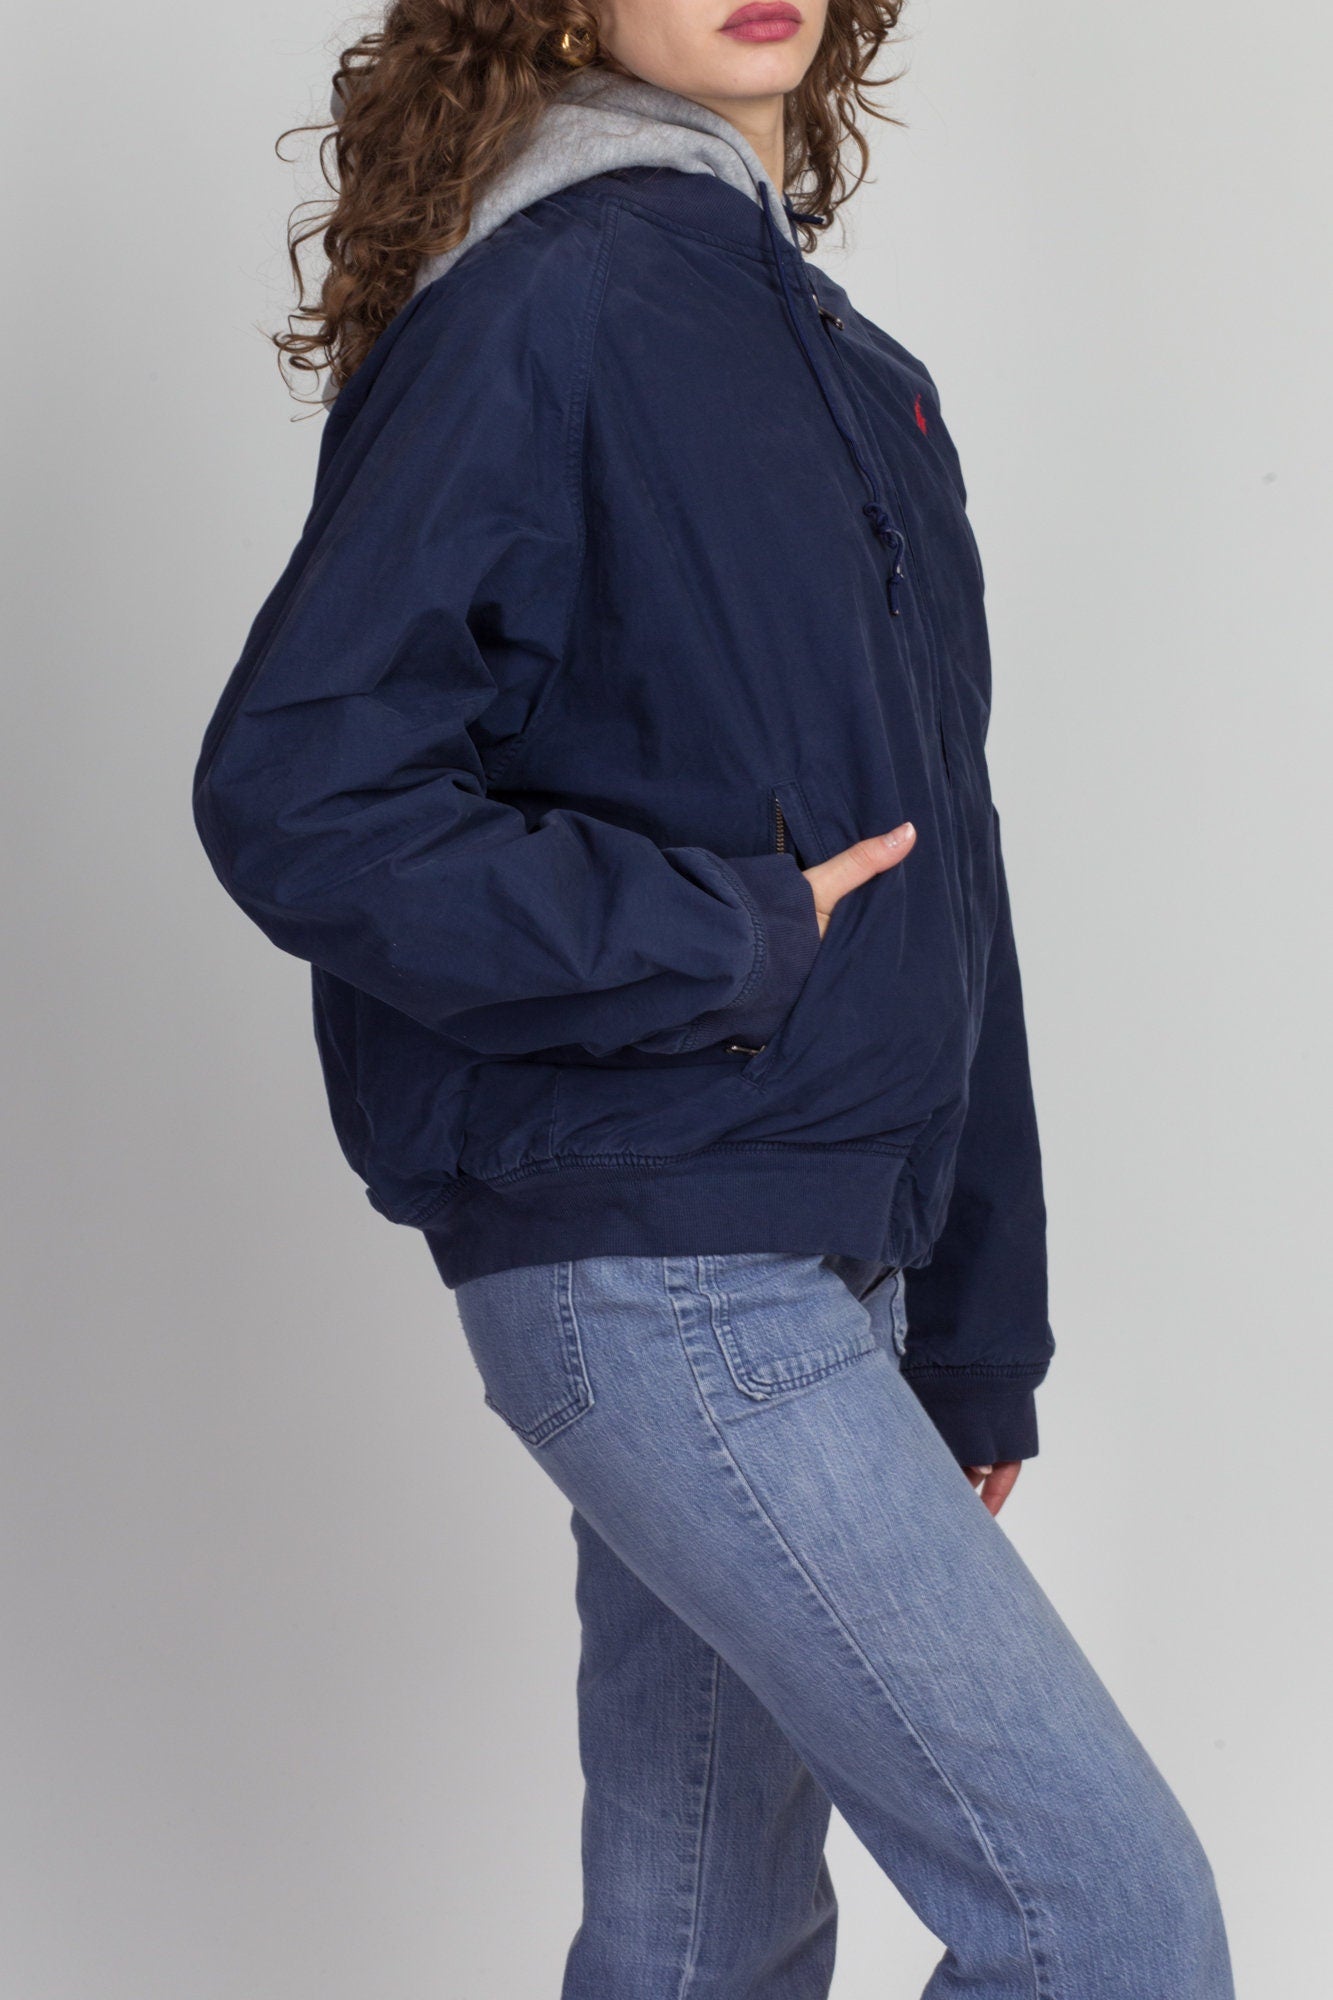 90s Polo Ralph Lauren Hooded Jacket - Men's Large, Women's XL 